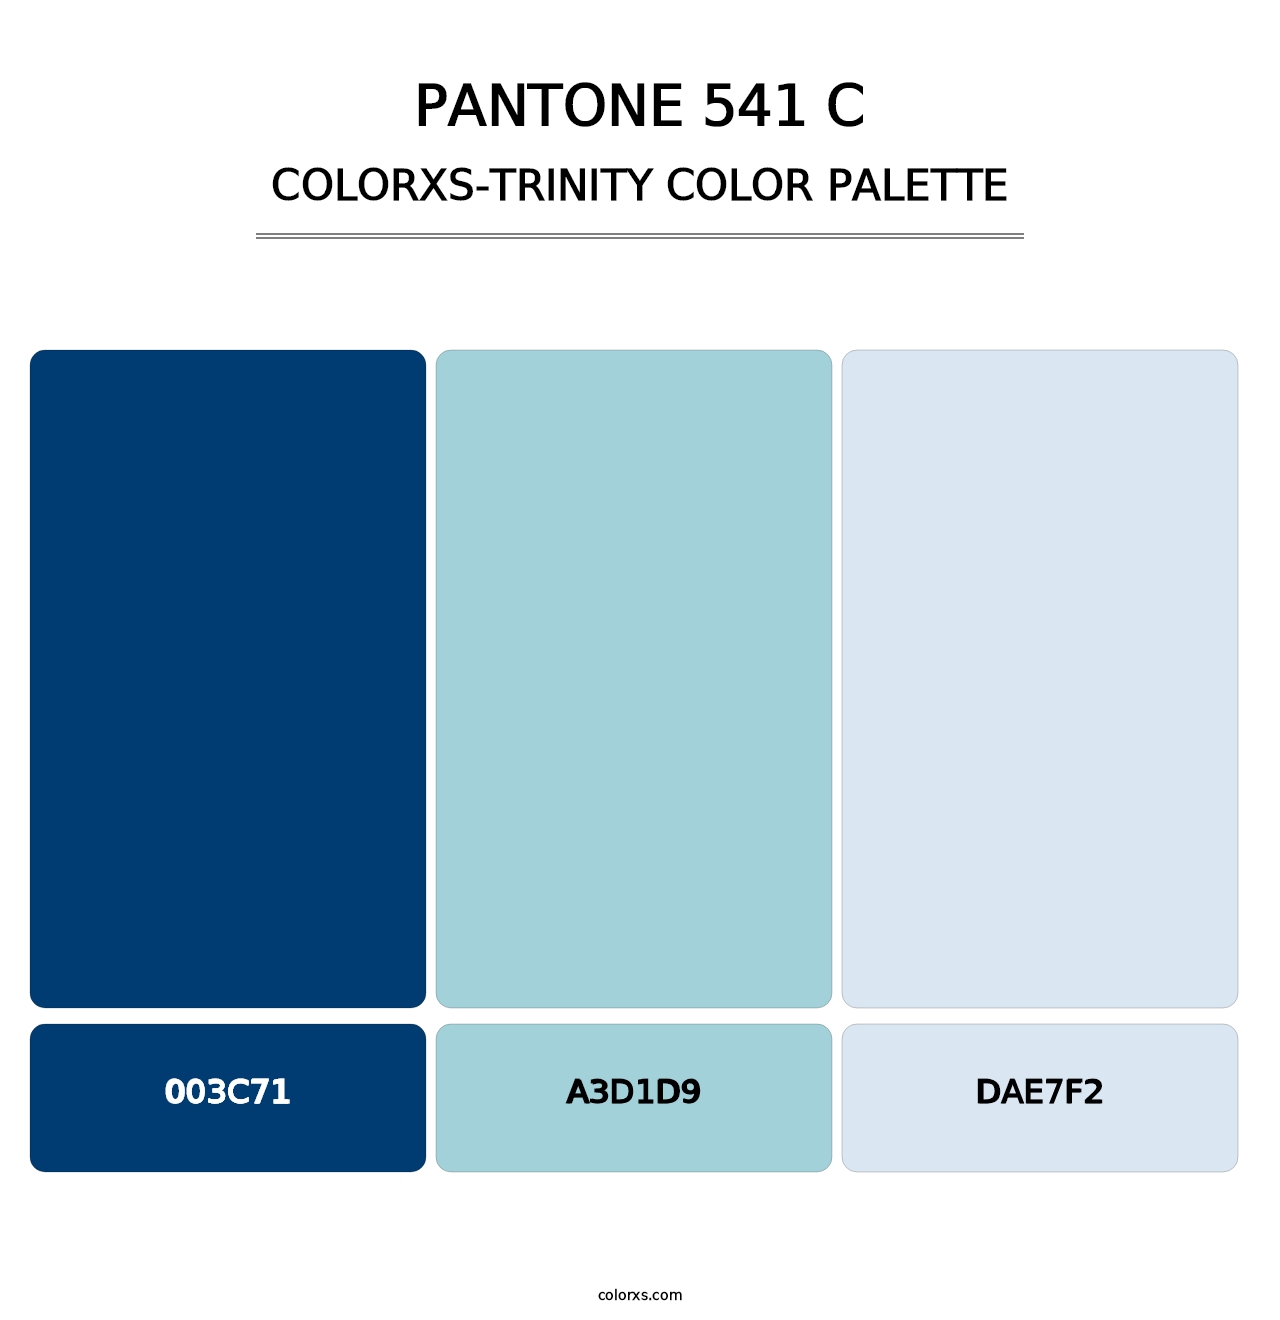 PANTONE 541 C - Colorxs Trinity Palette